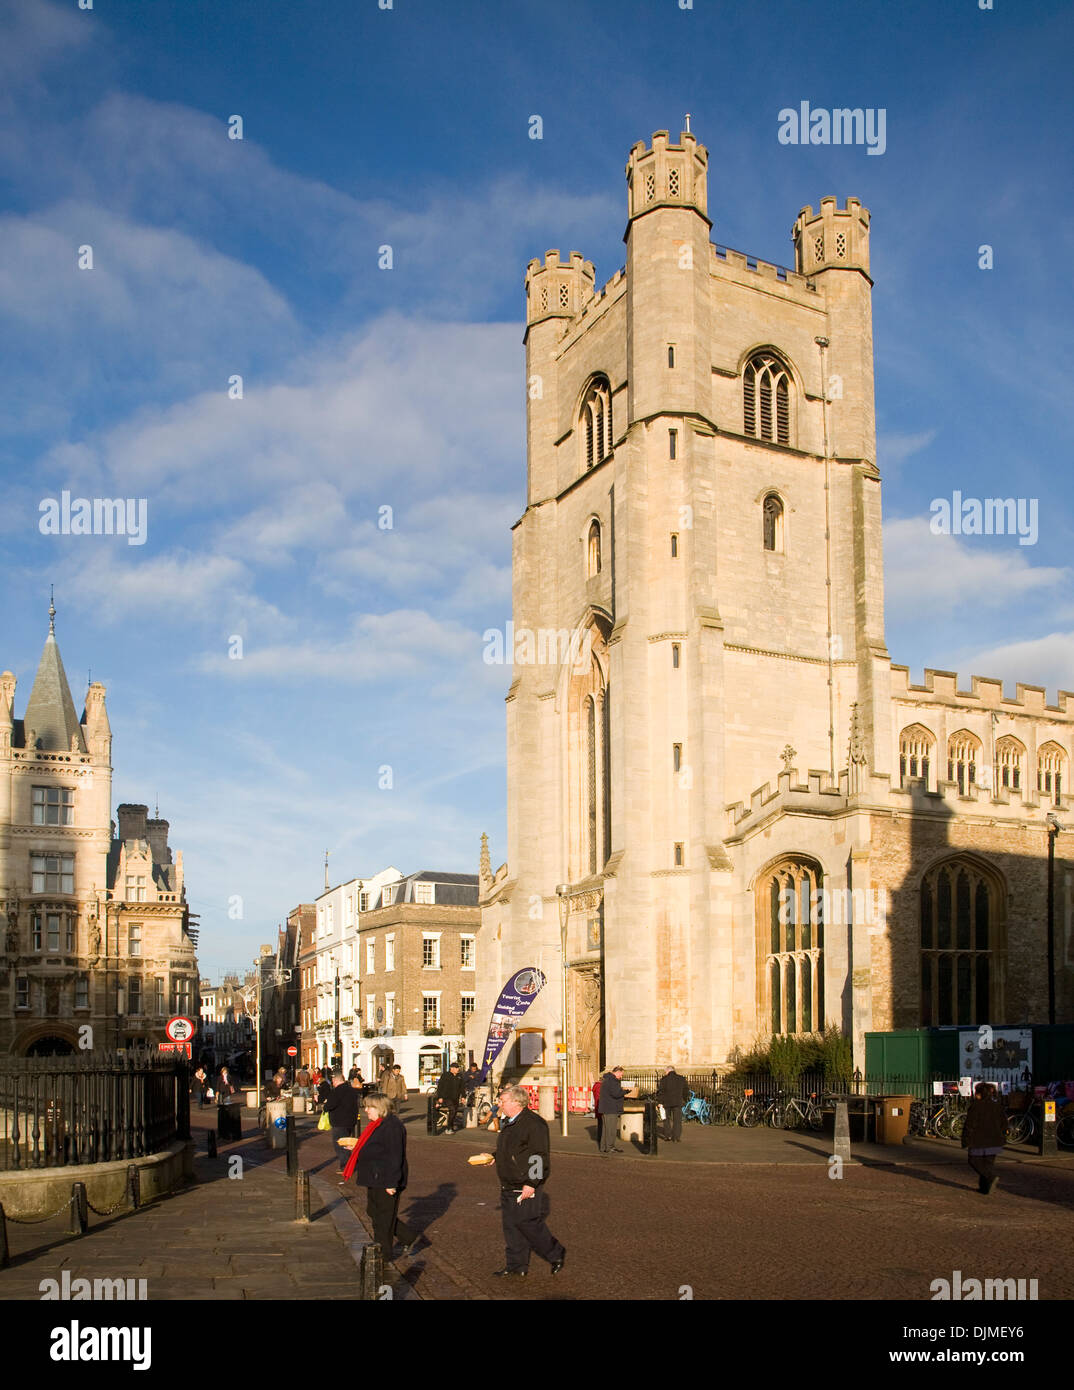 Great St Mary’s church, Cambridge university, Cambridge, England Stock Photo